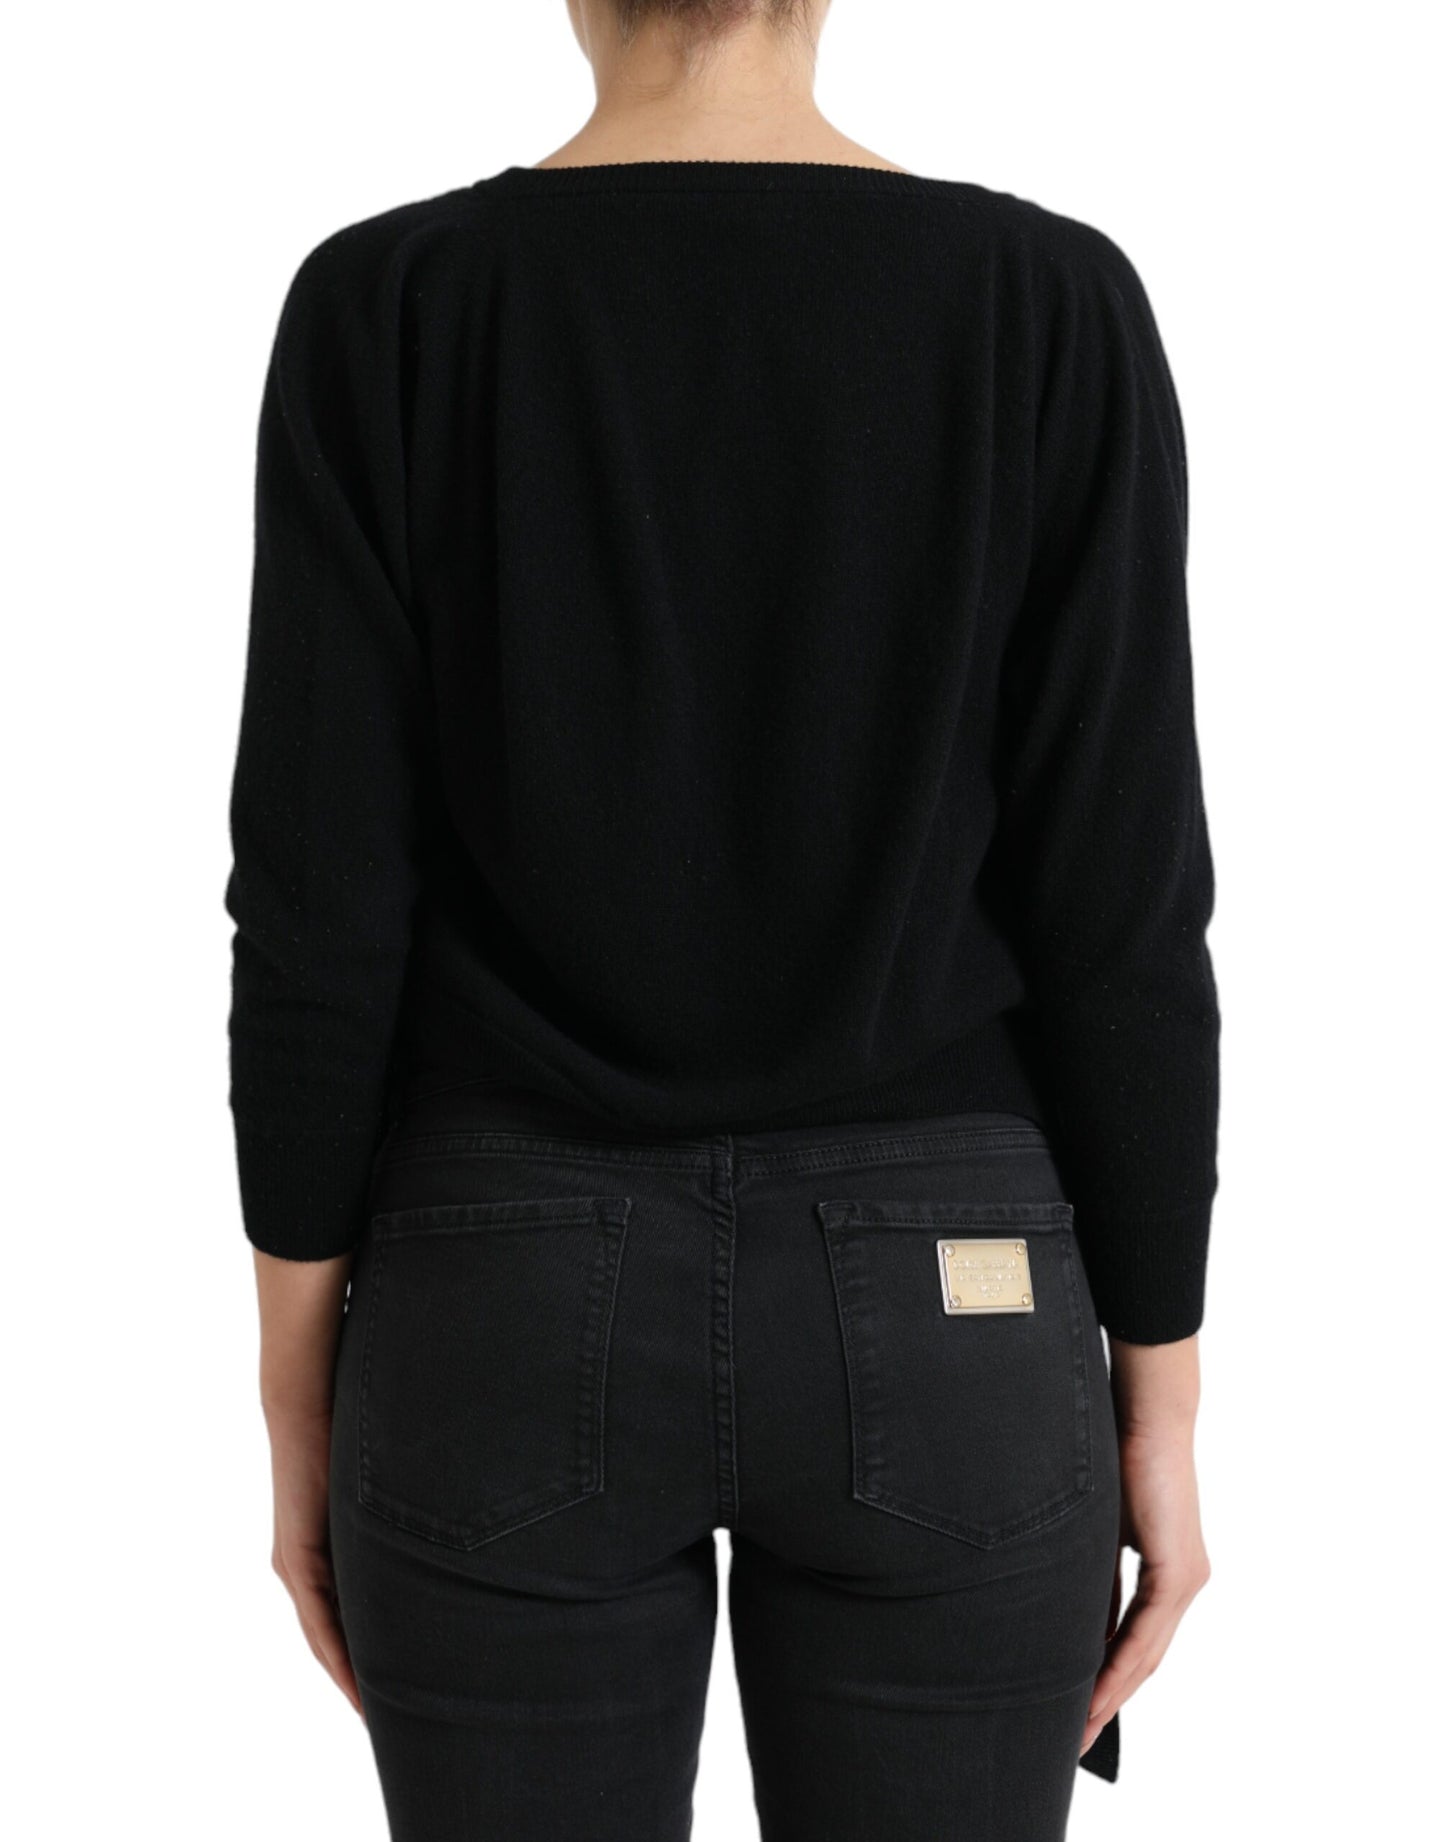 Dolce & Gabbana Elegant Cashmere Cardigan Vest Sweater